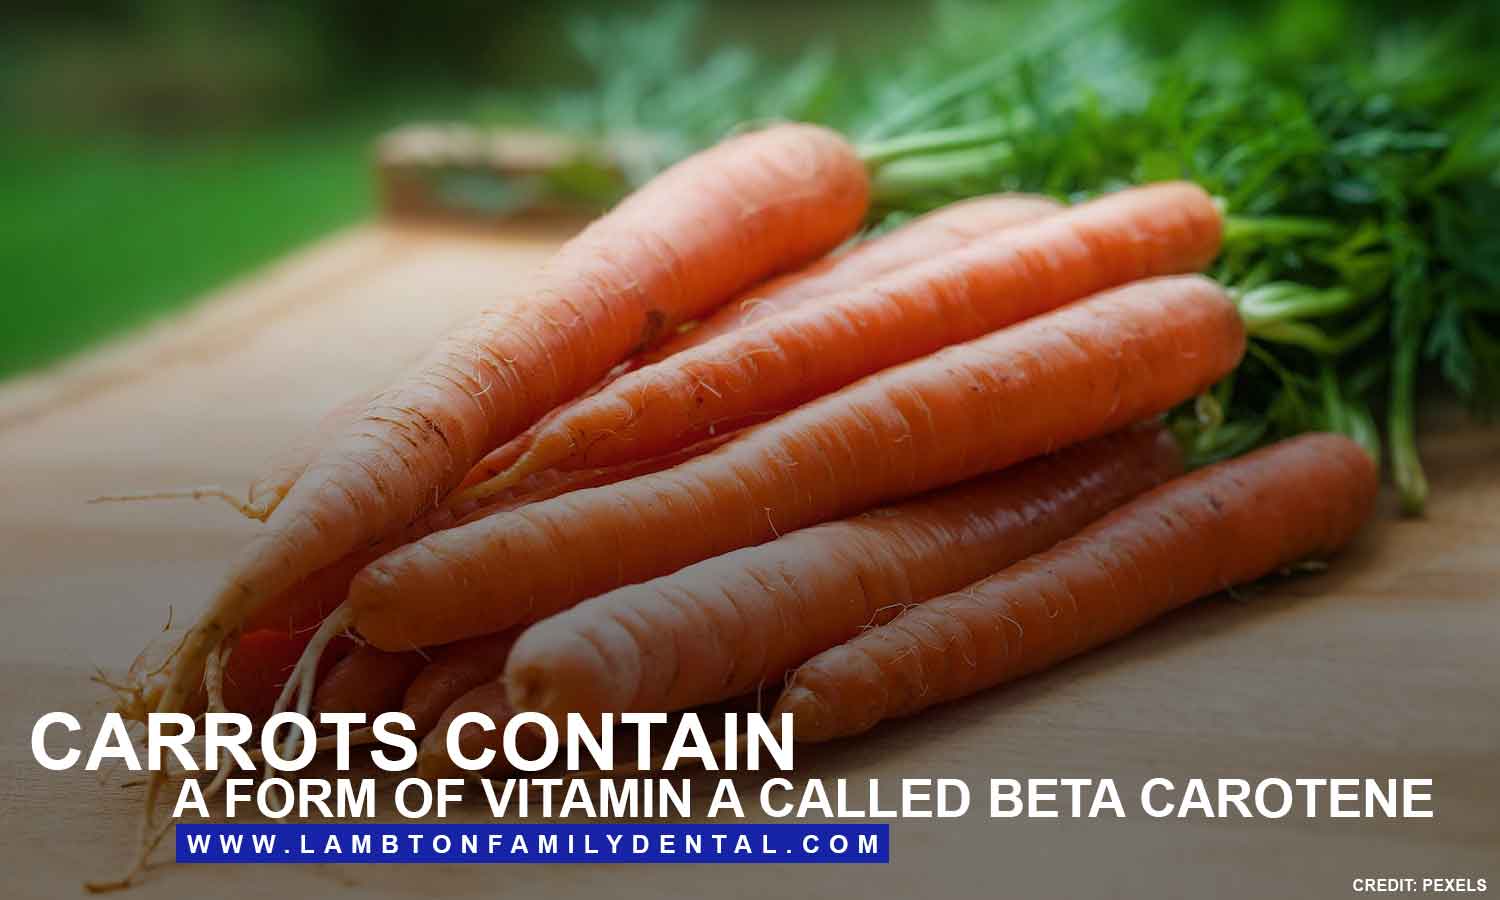 Carrots contain a form of vitamin A called beta carotene